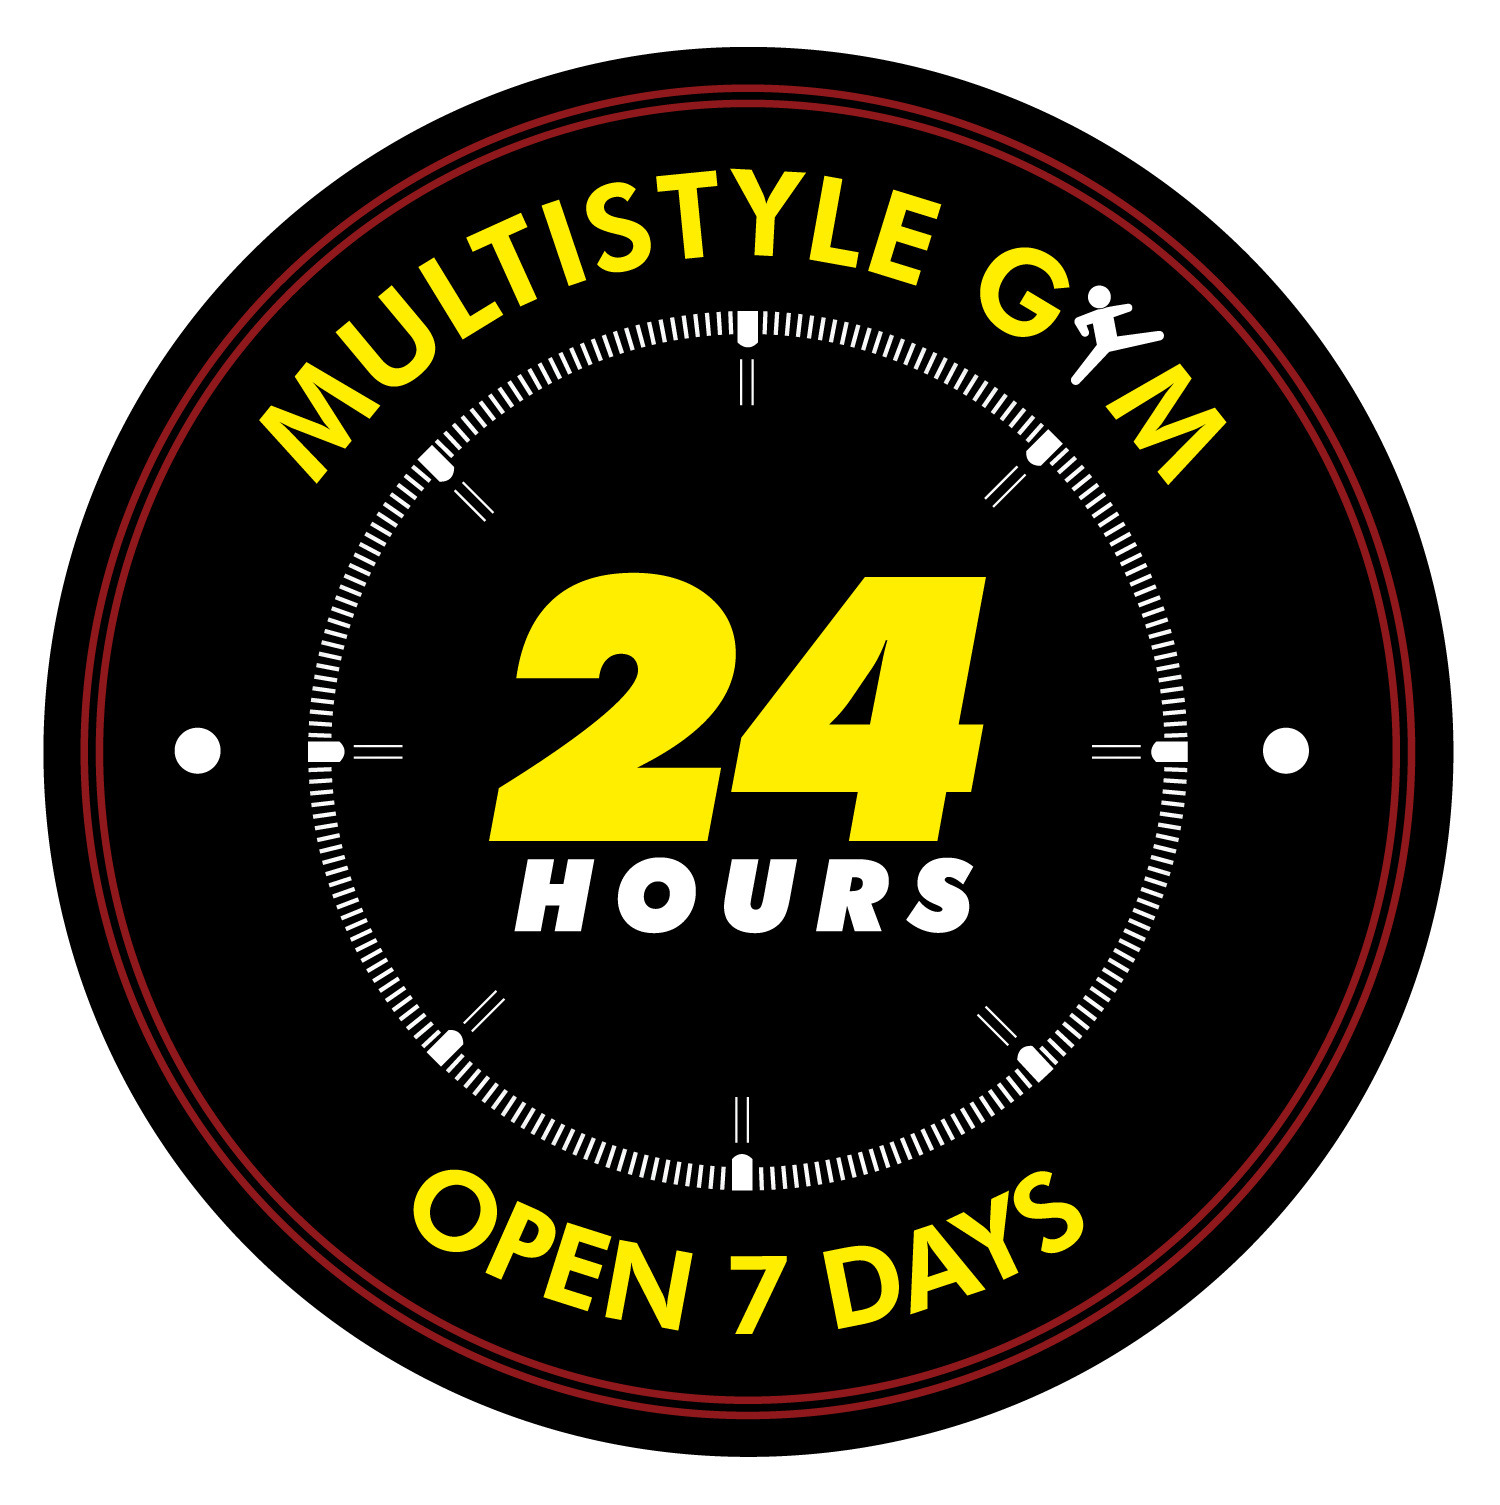 Multistyle Gym 24/7